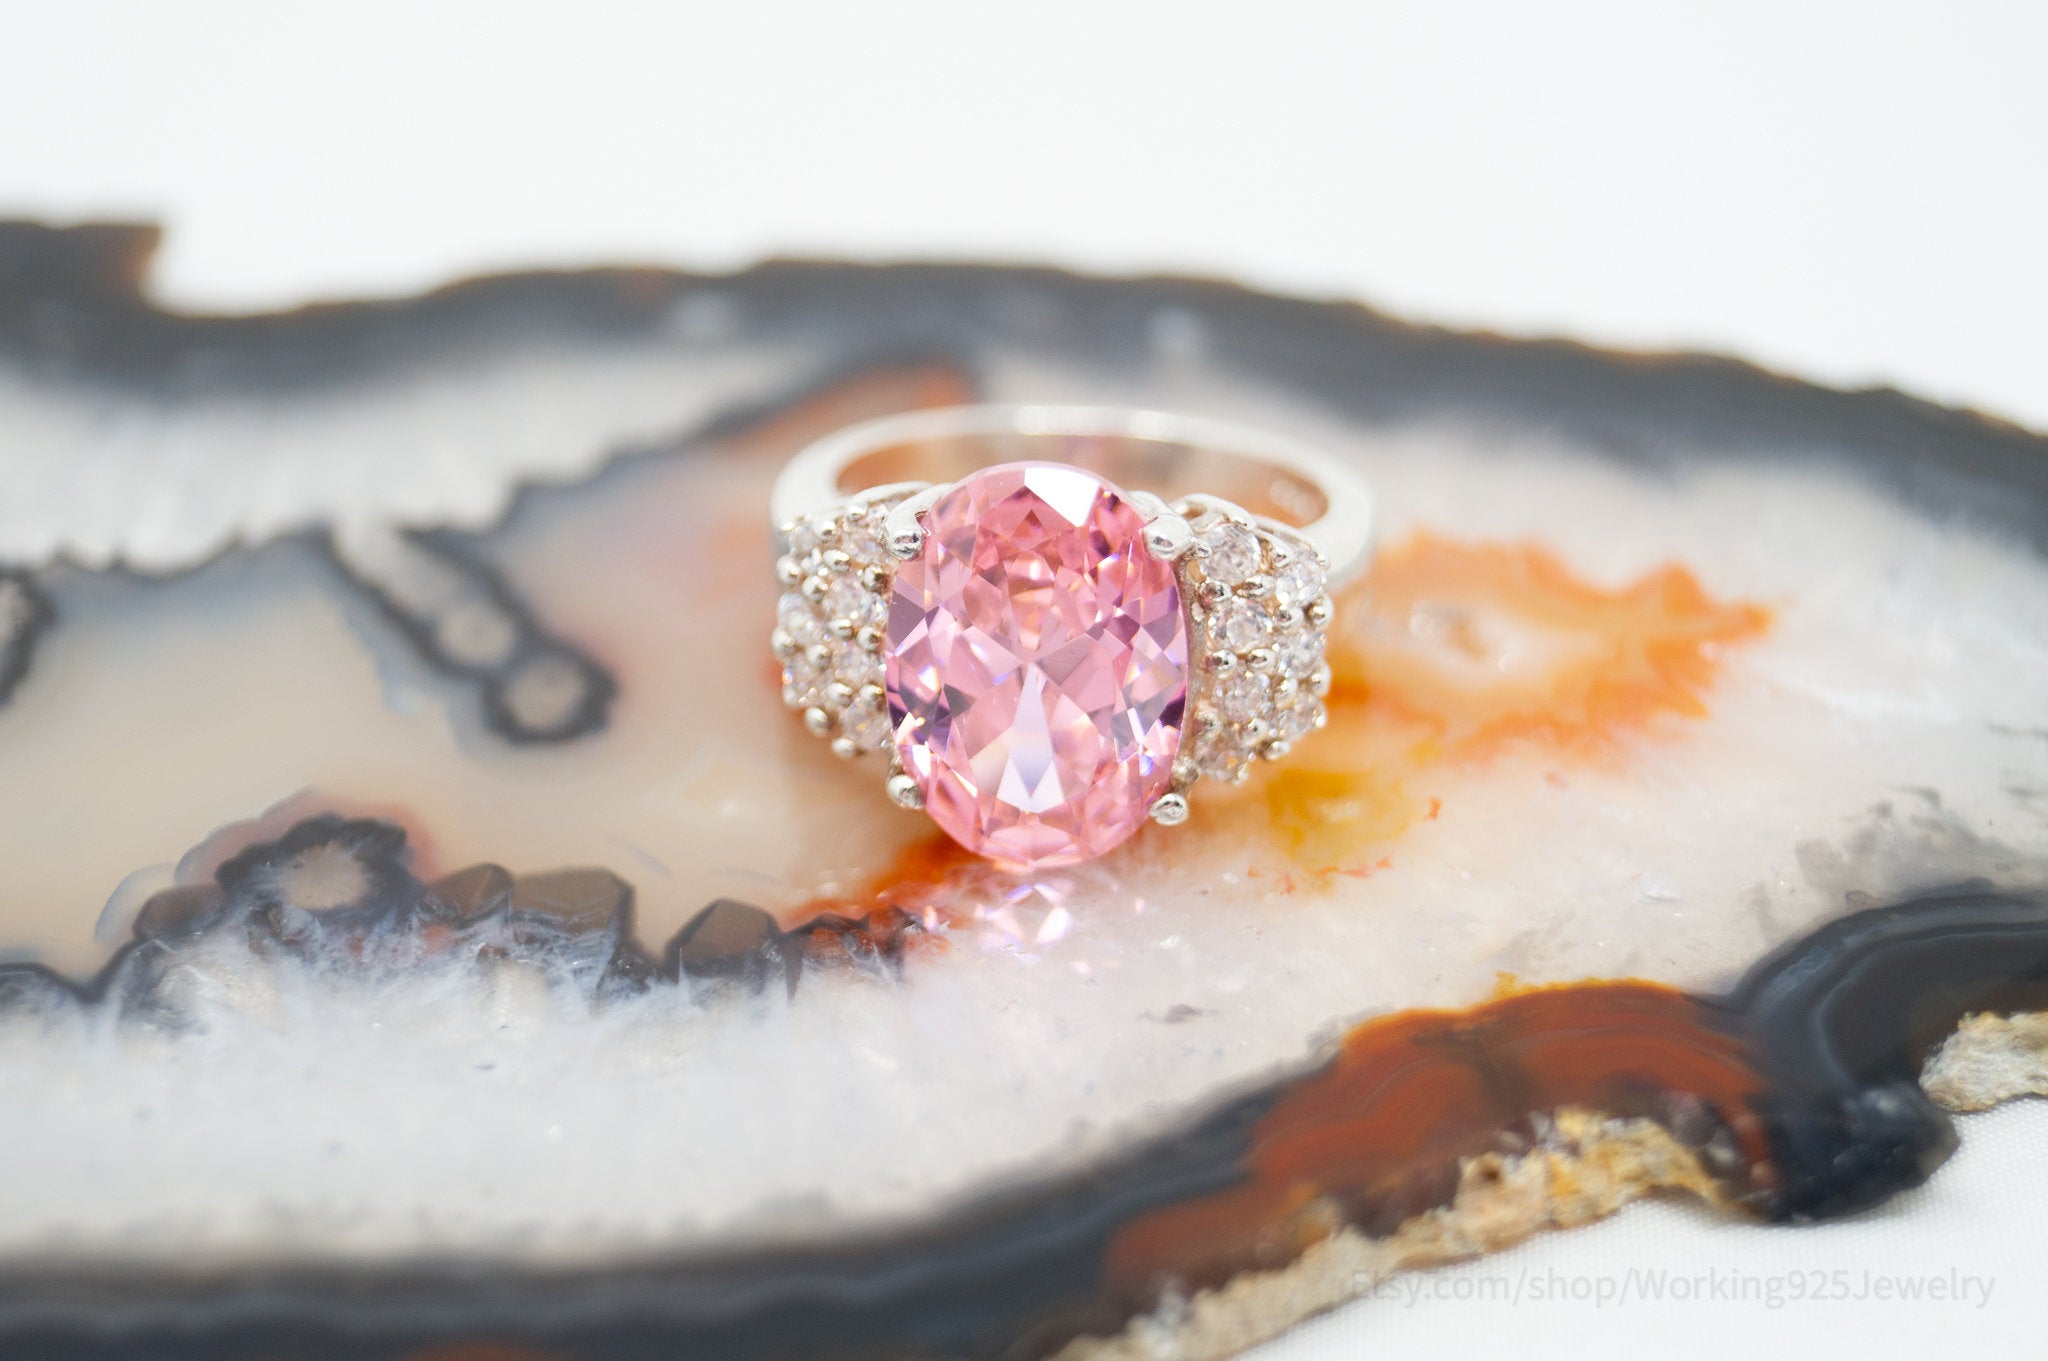 Vintage Art Deco Style Pink Topaz Cz Statement Ring Sterling Silver - Size 7.5